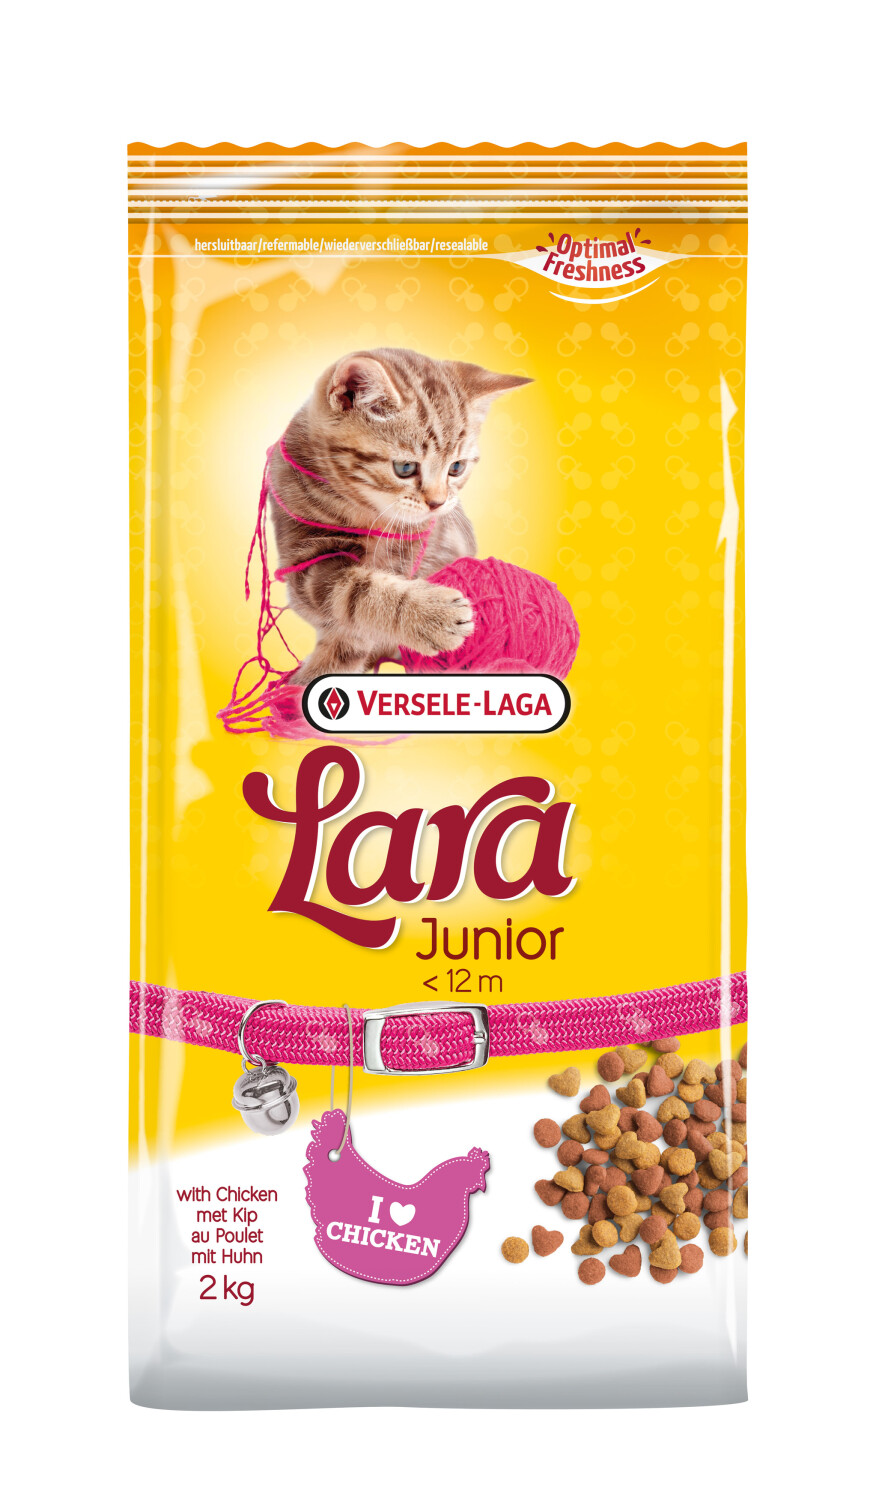 Afbeelding Versele-Laga Lara Junior Kip kattenvoer 2 kg door Tuinadvies.be